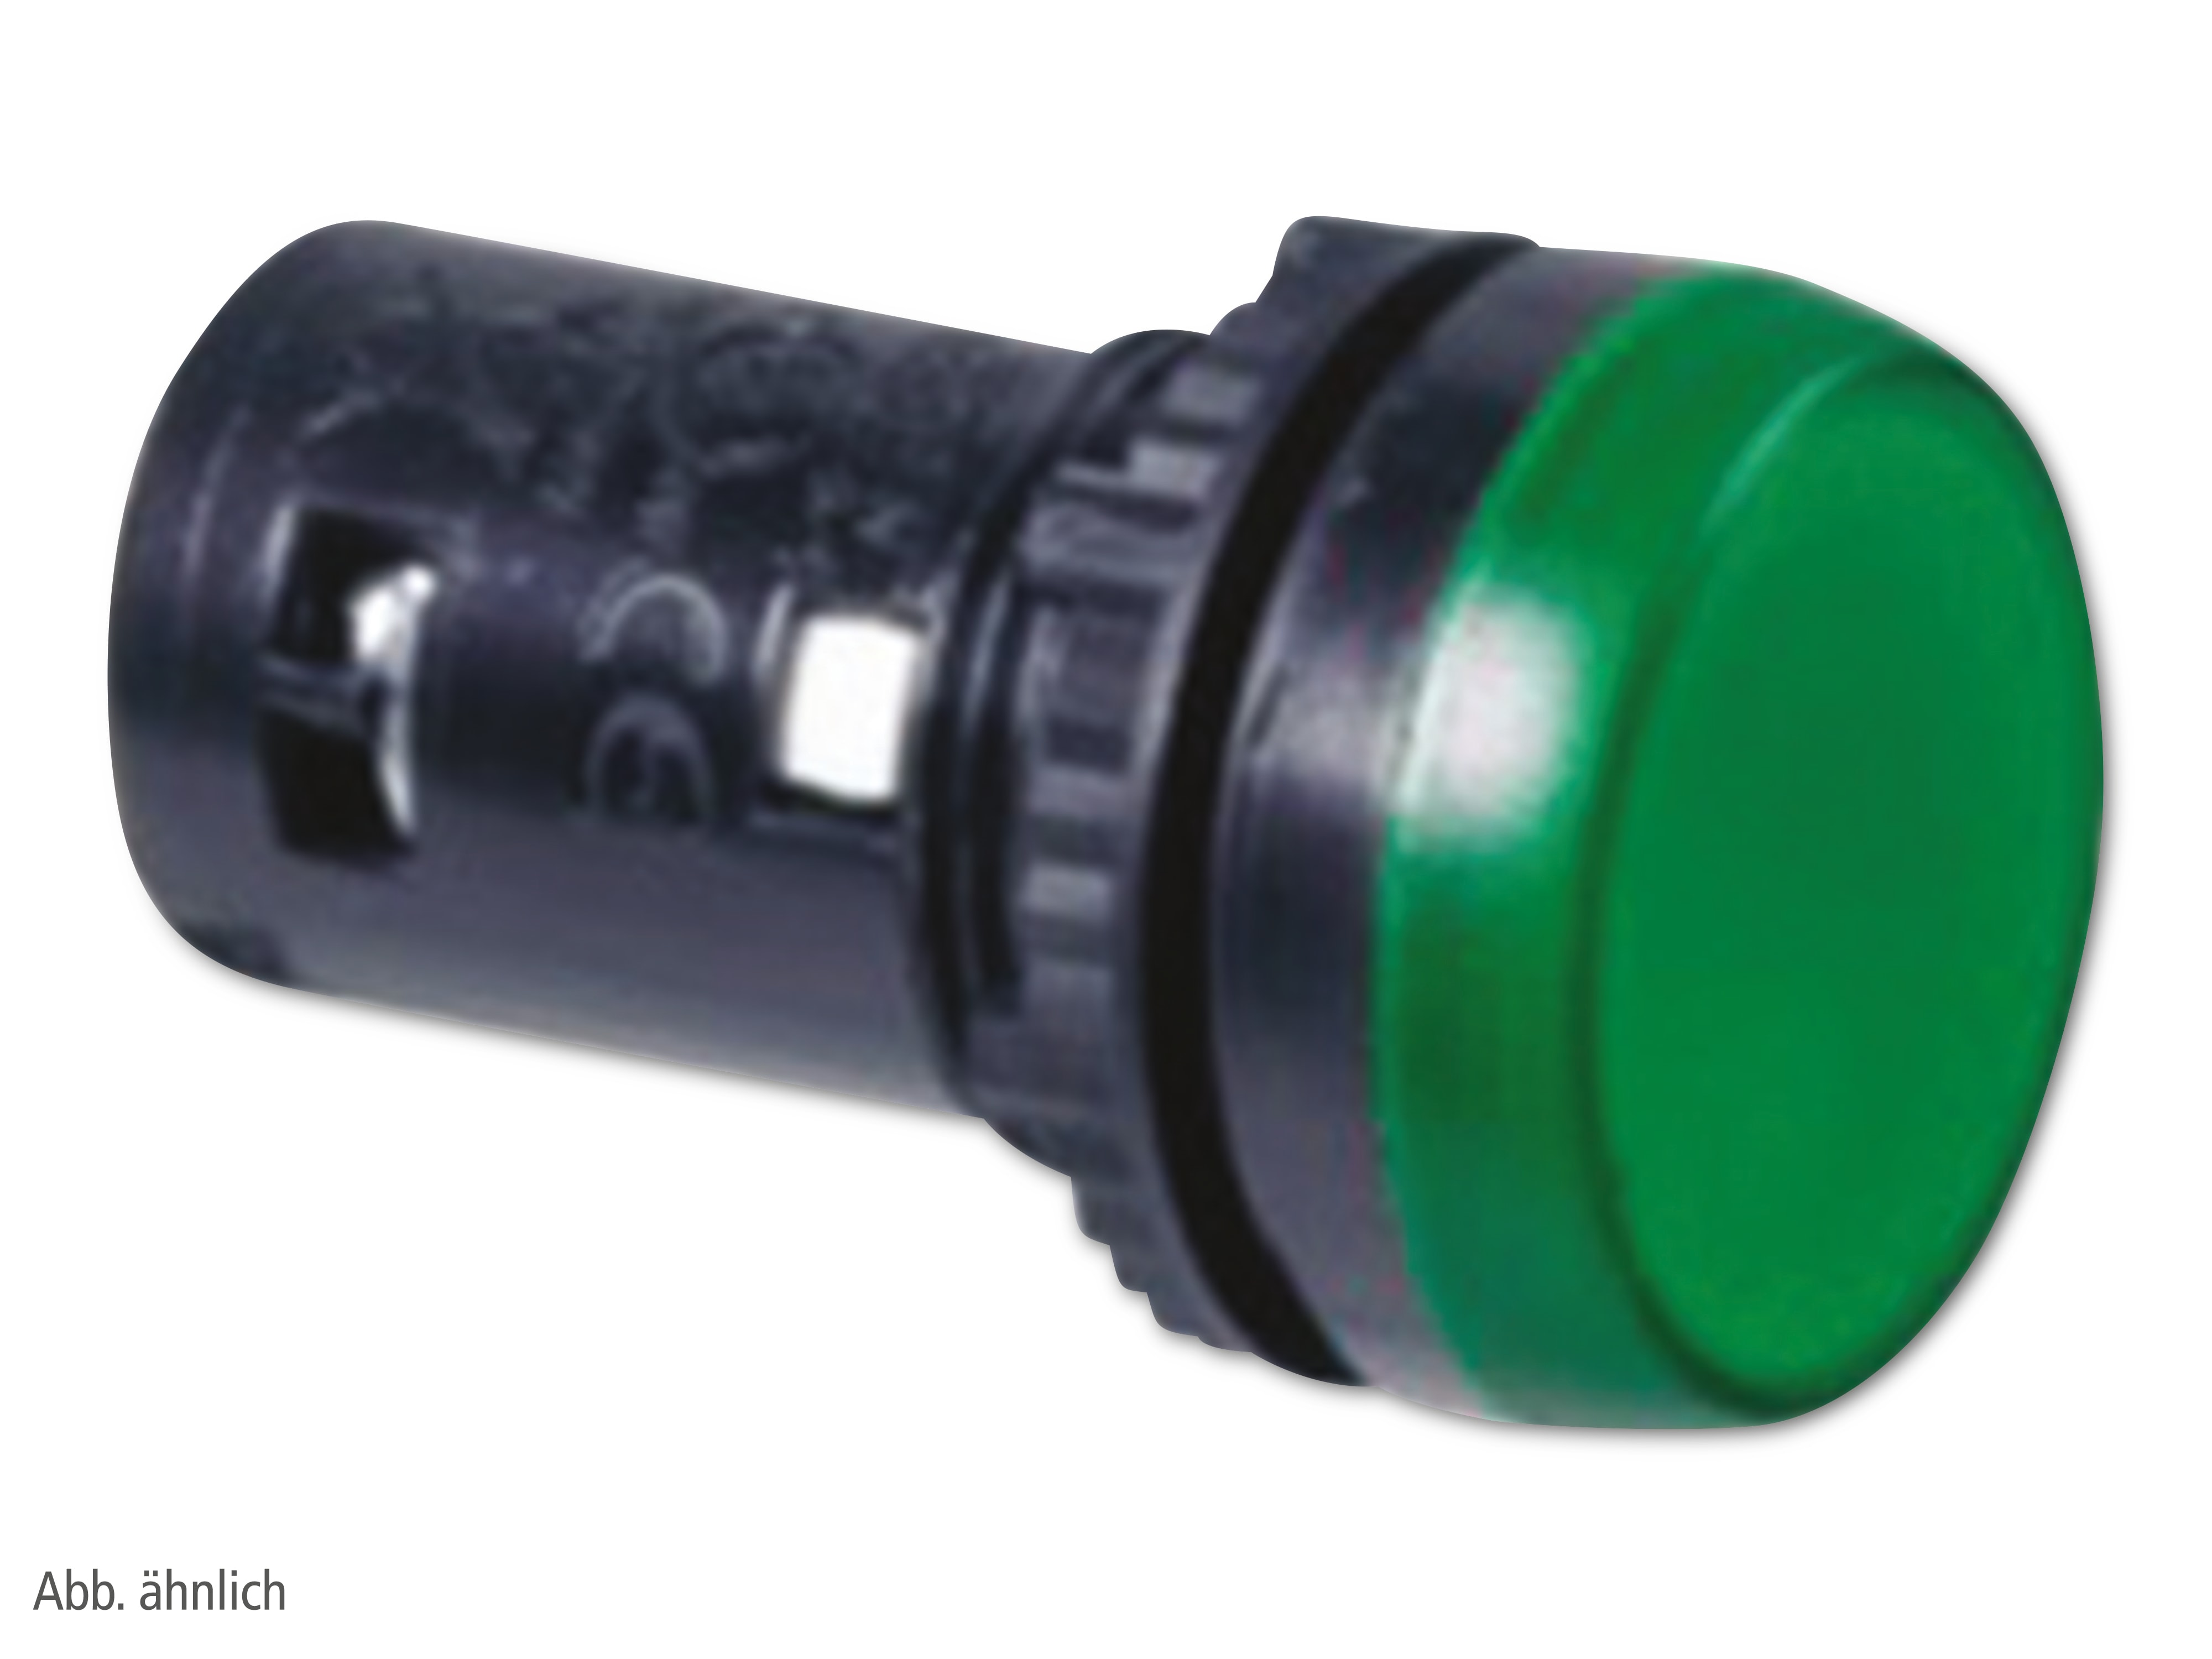 BACO Befehls- und Meldegeräte, L20SC20L, Kompakt-Meldeleuchte, grün, 22 mm